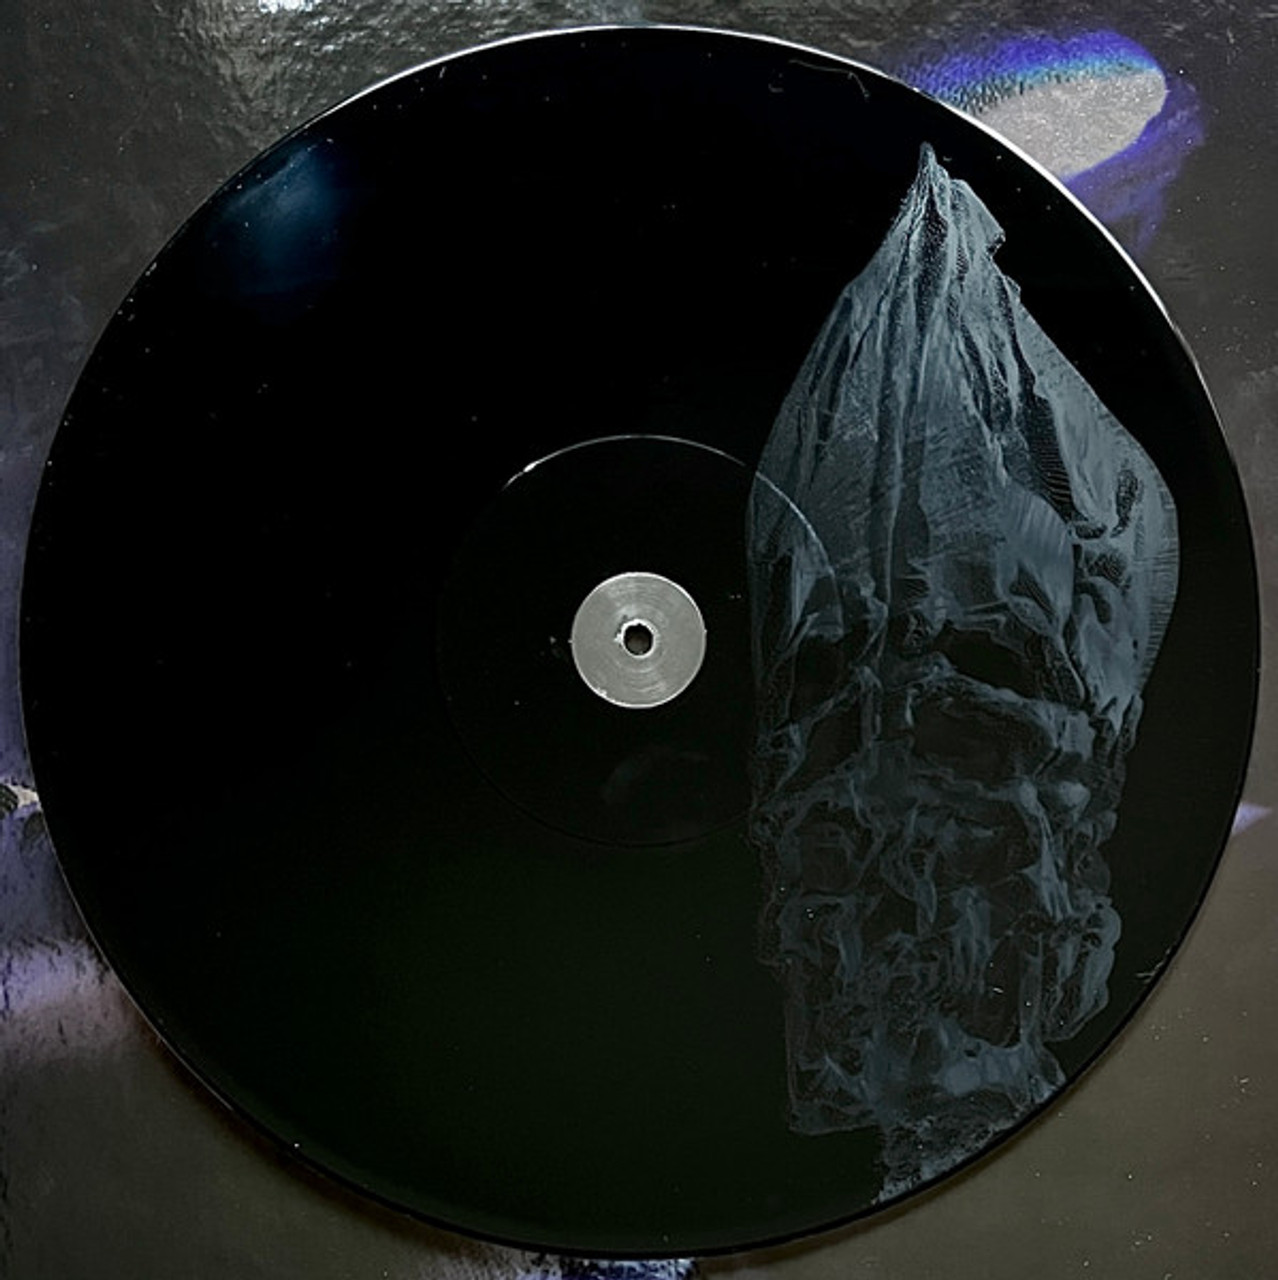 Tool ‎– Fear Inoculum - New 2 LP Record 2019 RCA Europe Gold Vinyl & I–  Shuga Records